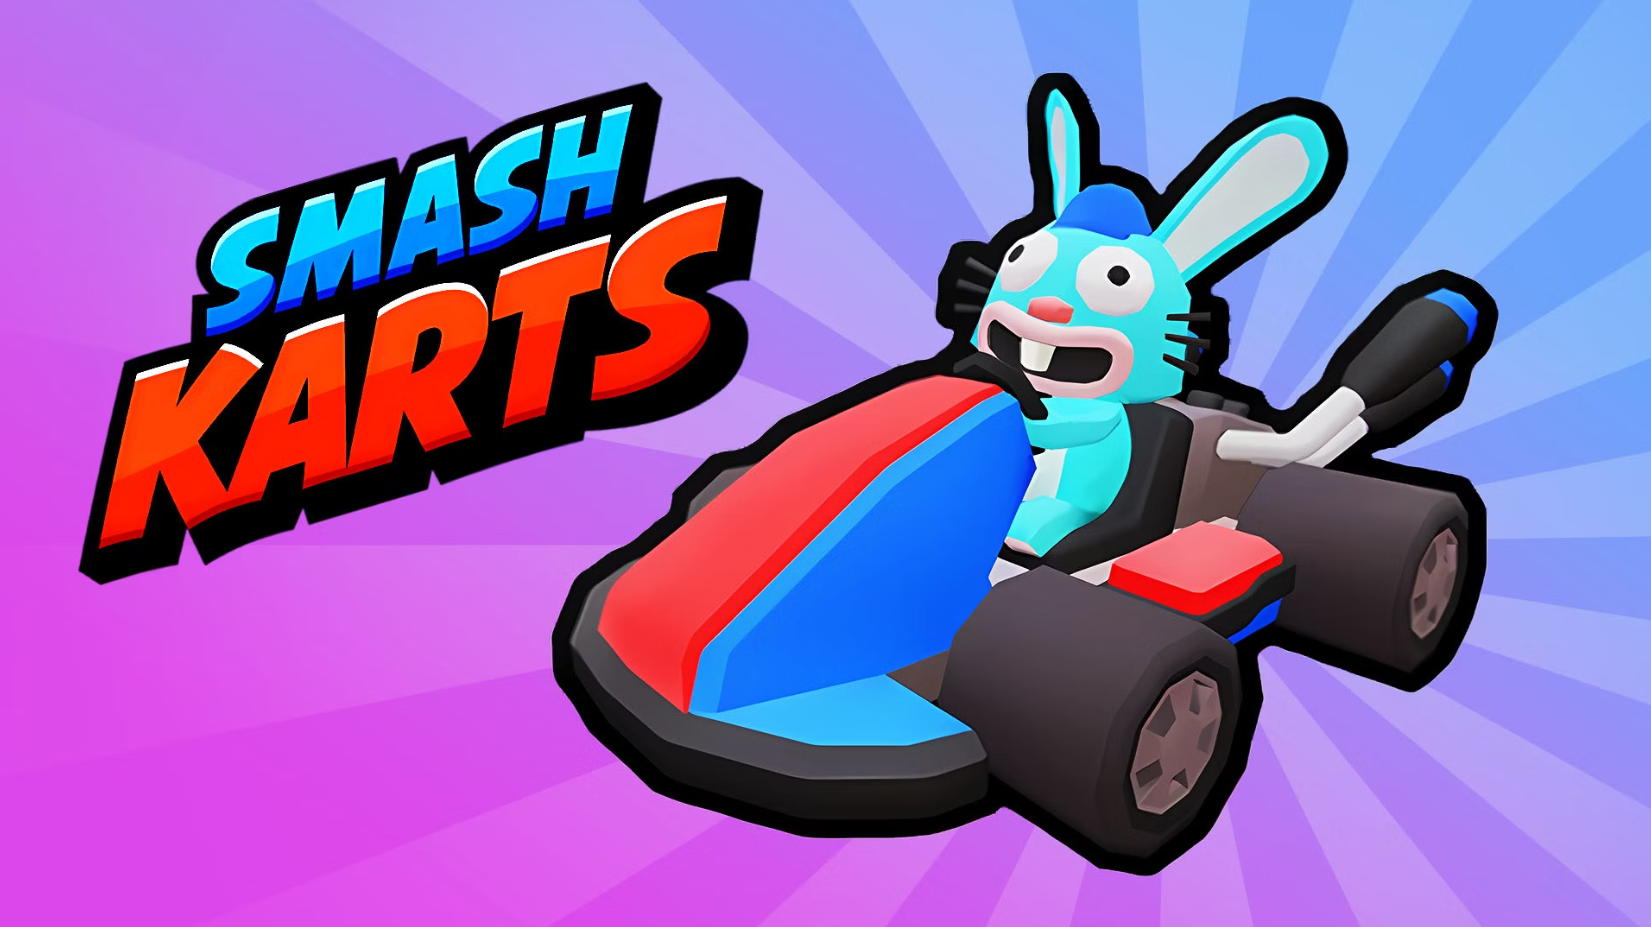 Playthrough: I am back - Smash Karts for Android